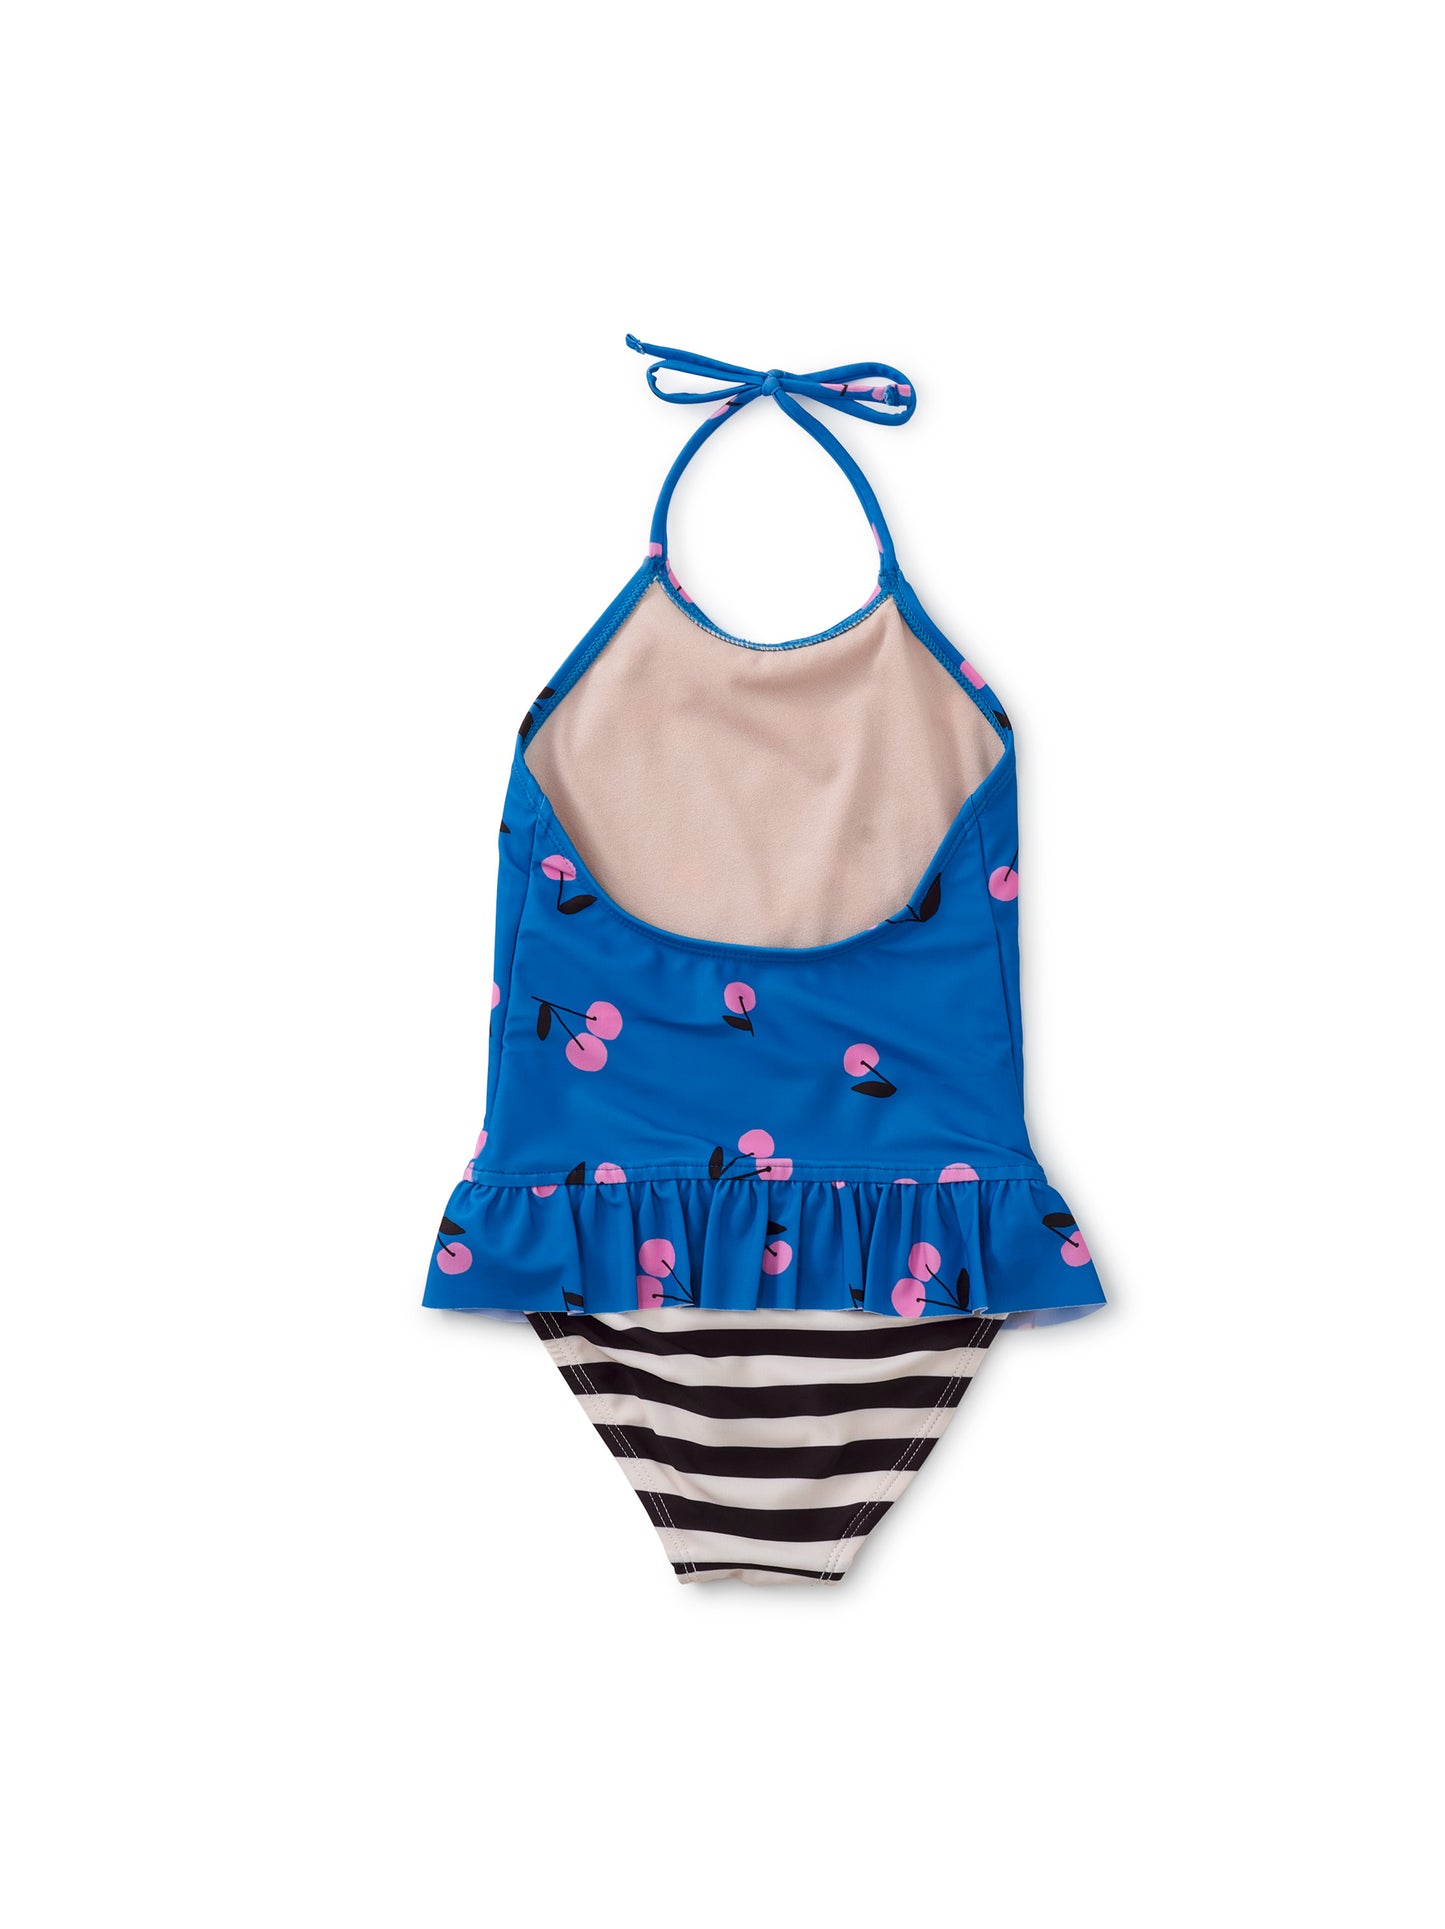 Tossed Cherries in Blue Peplum One-Piece Swimsuit